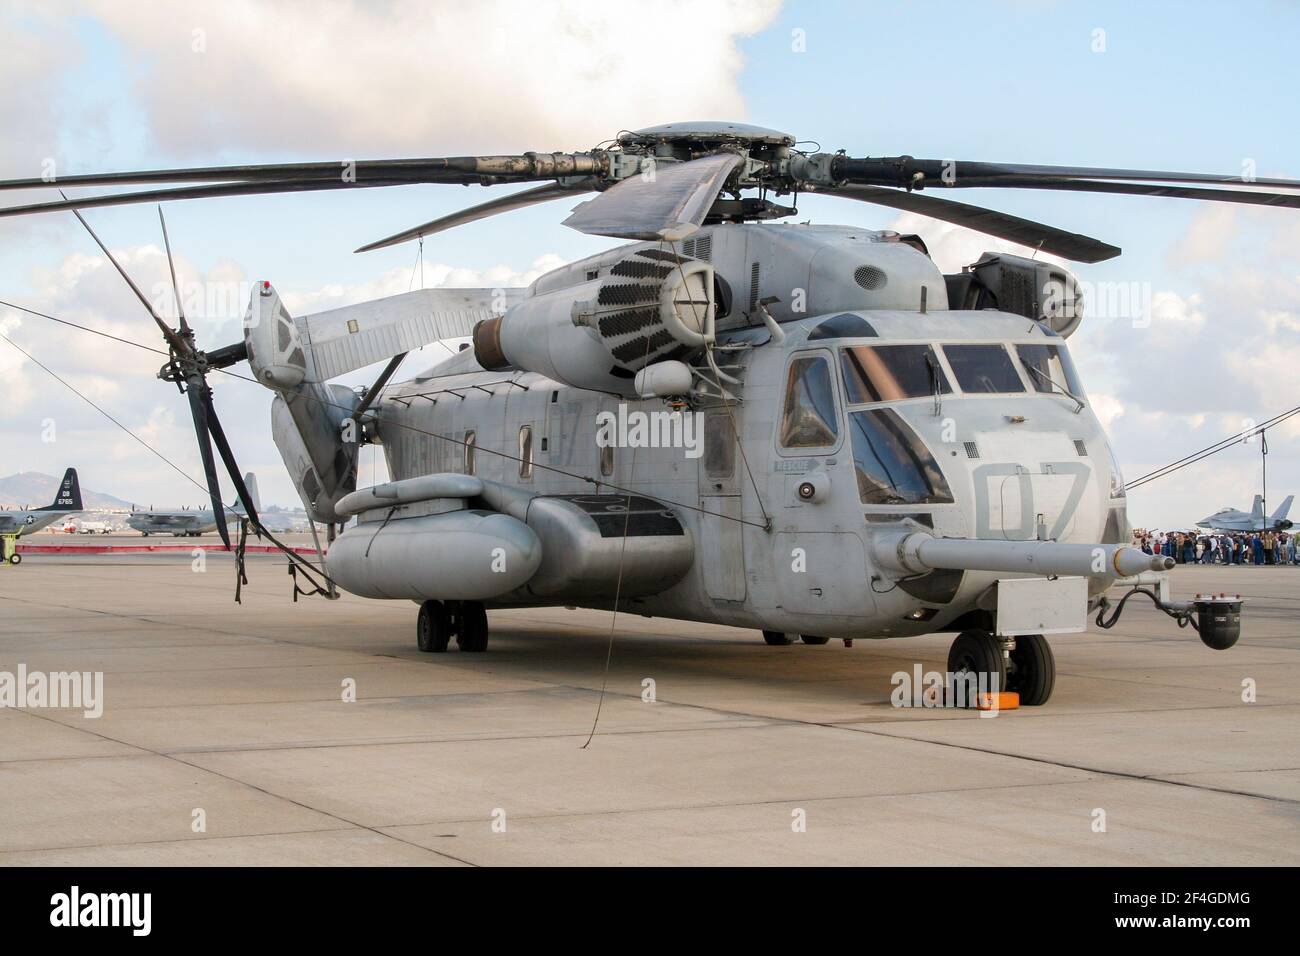 US Marines CH-53E helicóptero militar Super Stallion sobre ella&#39;s base de datos en la base aérea de Miramar. California, EE.UU. - 15 de octubre de 2016. Foto de stock